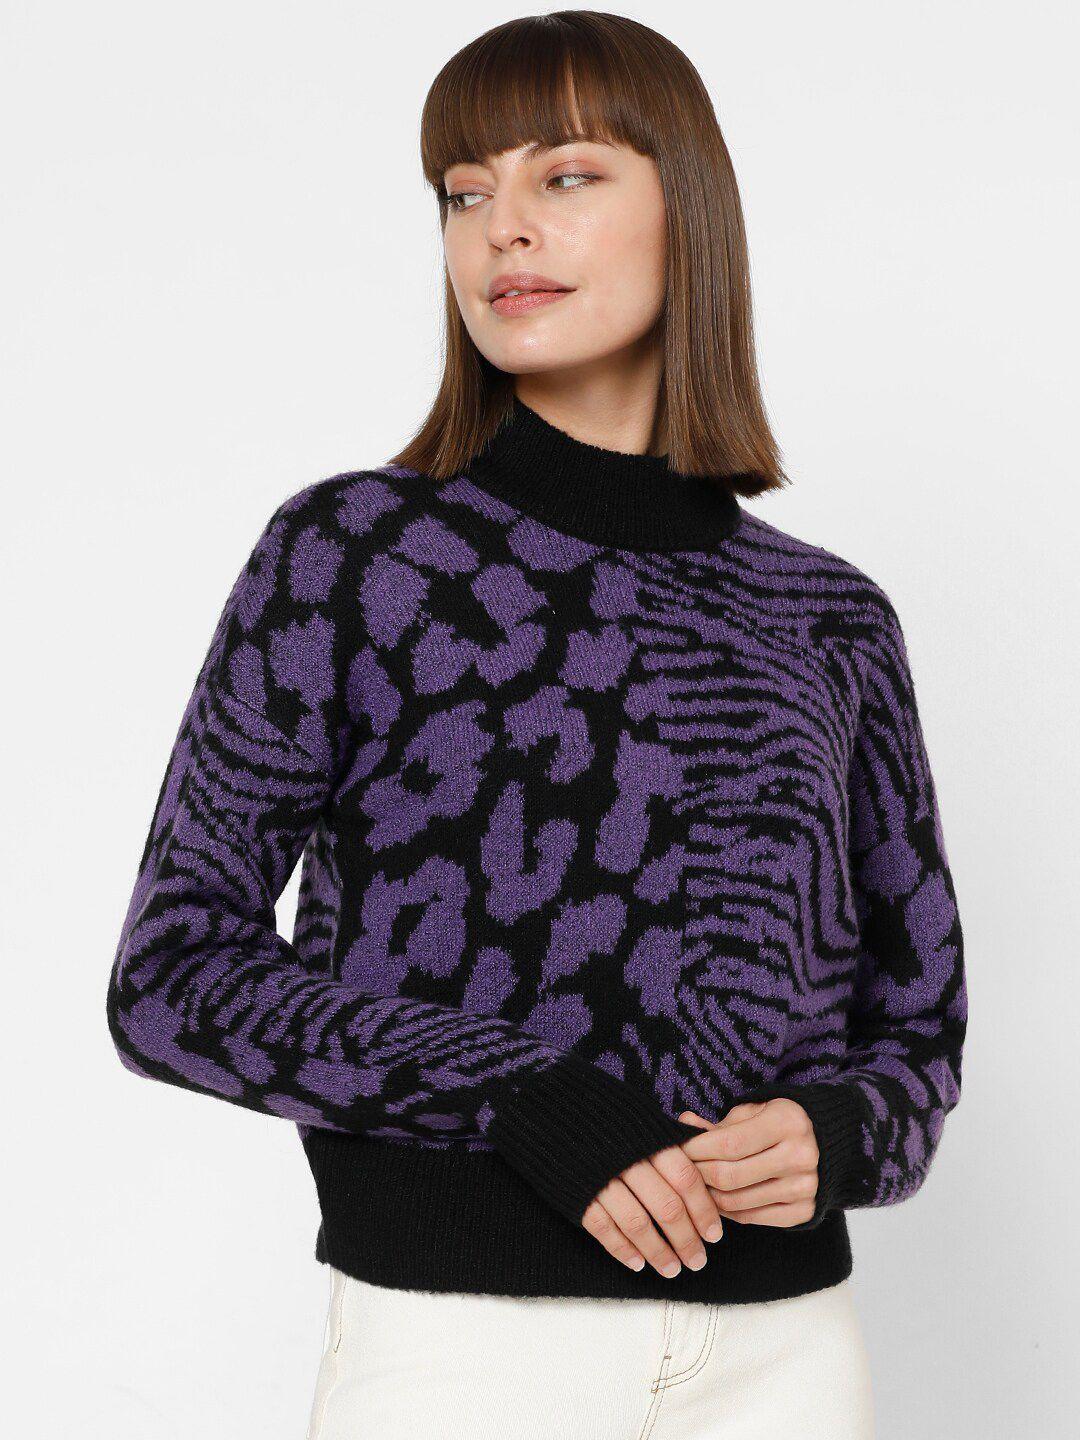 Vero Moda Long Sleeves Animal Printed Pullover